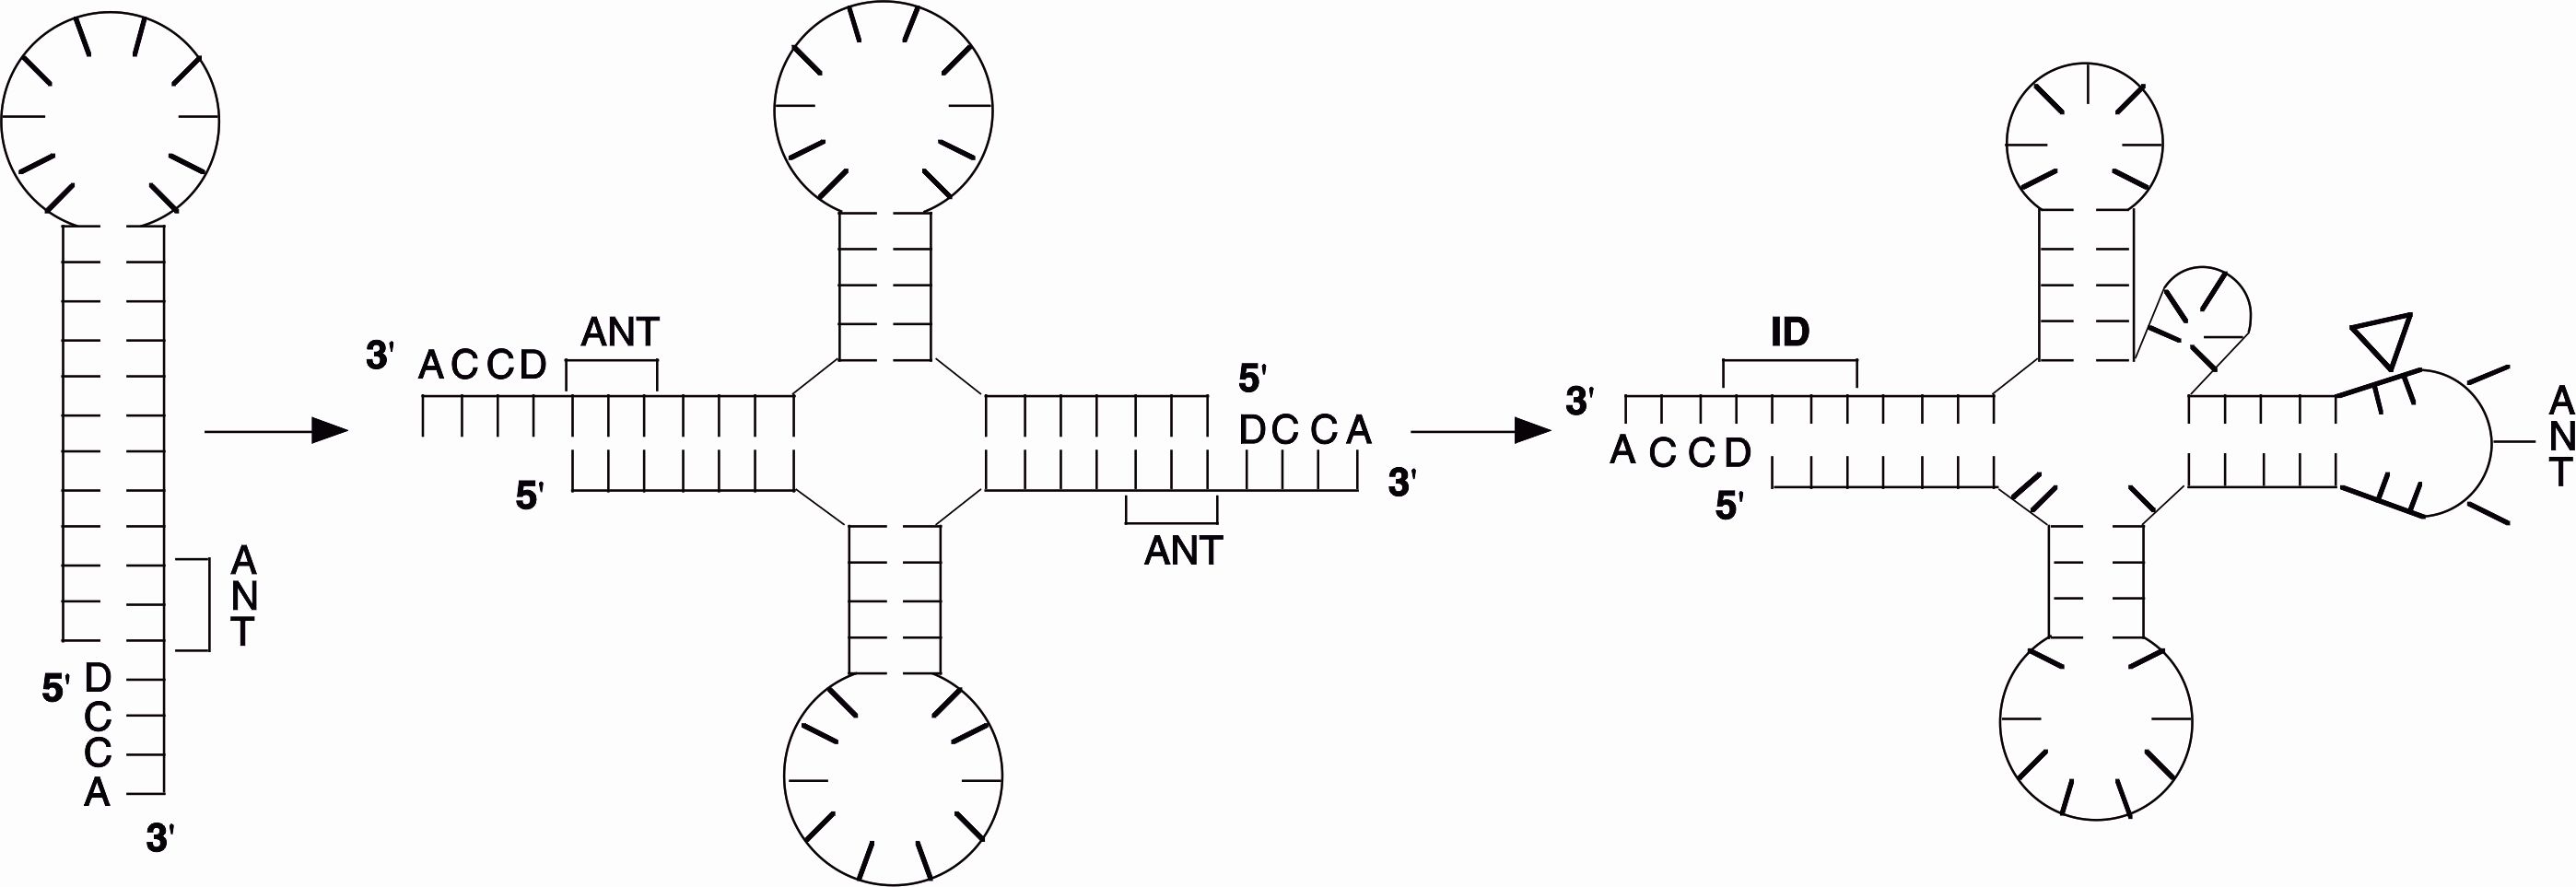 Model for the origin of the tRNA molecule.